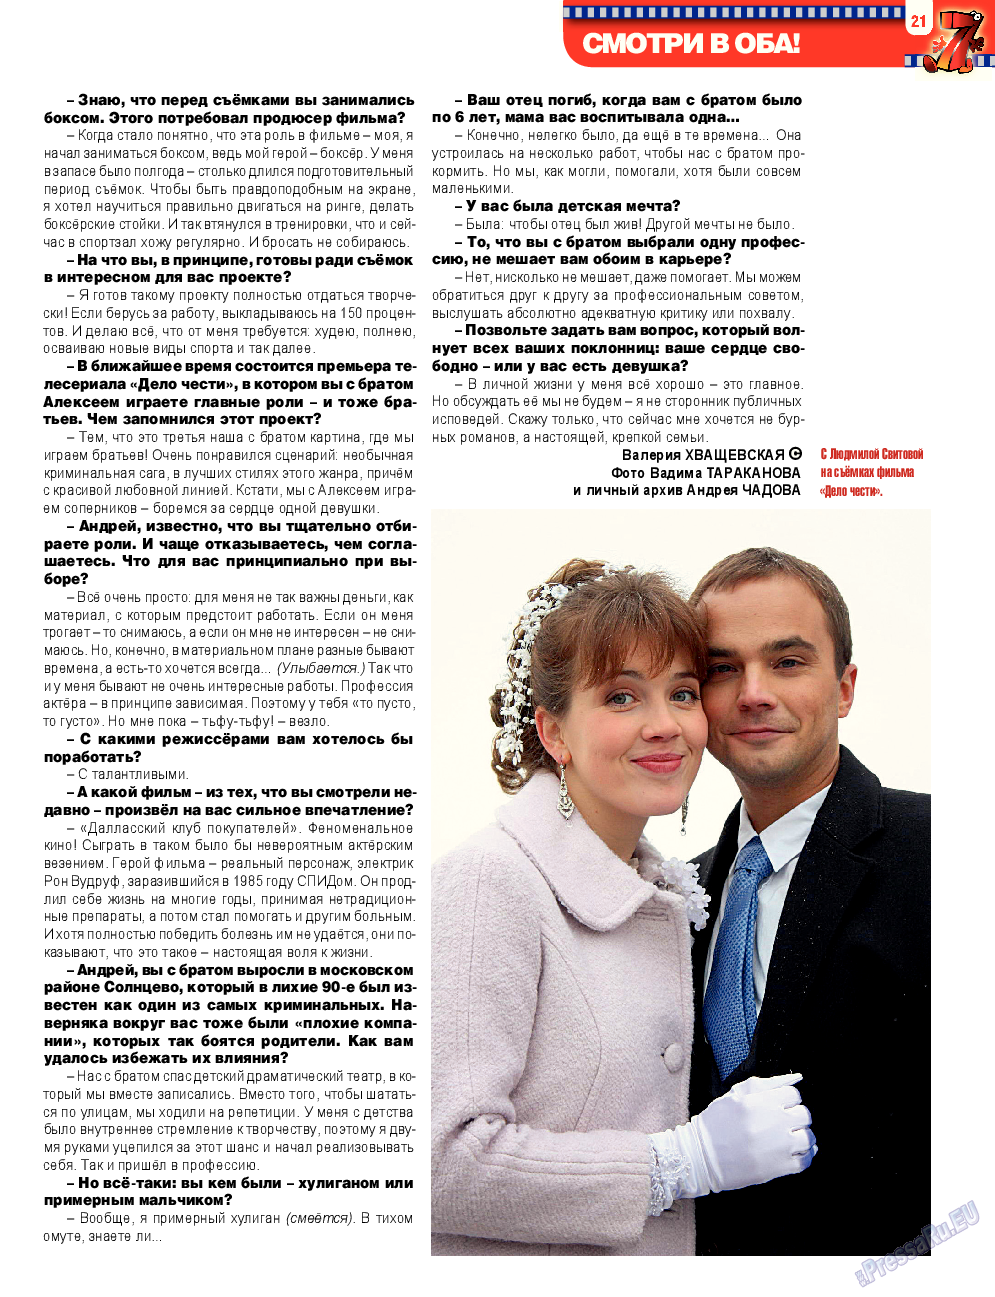 7плюс7я (журнал). 2014 год, номер 30, стр. 21